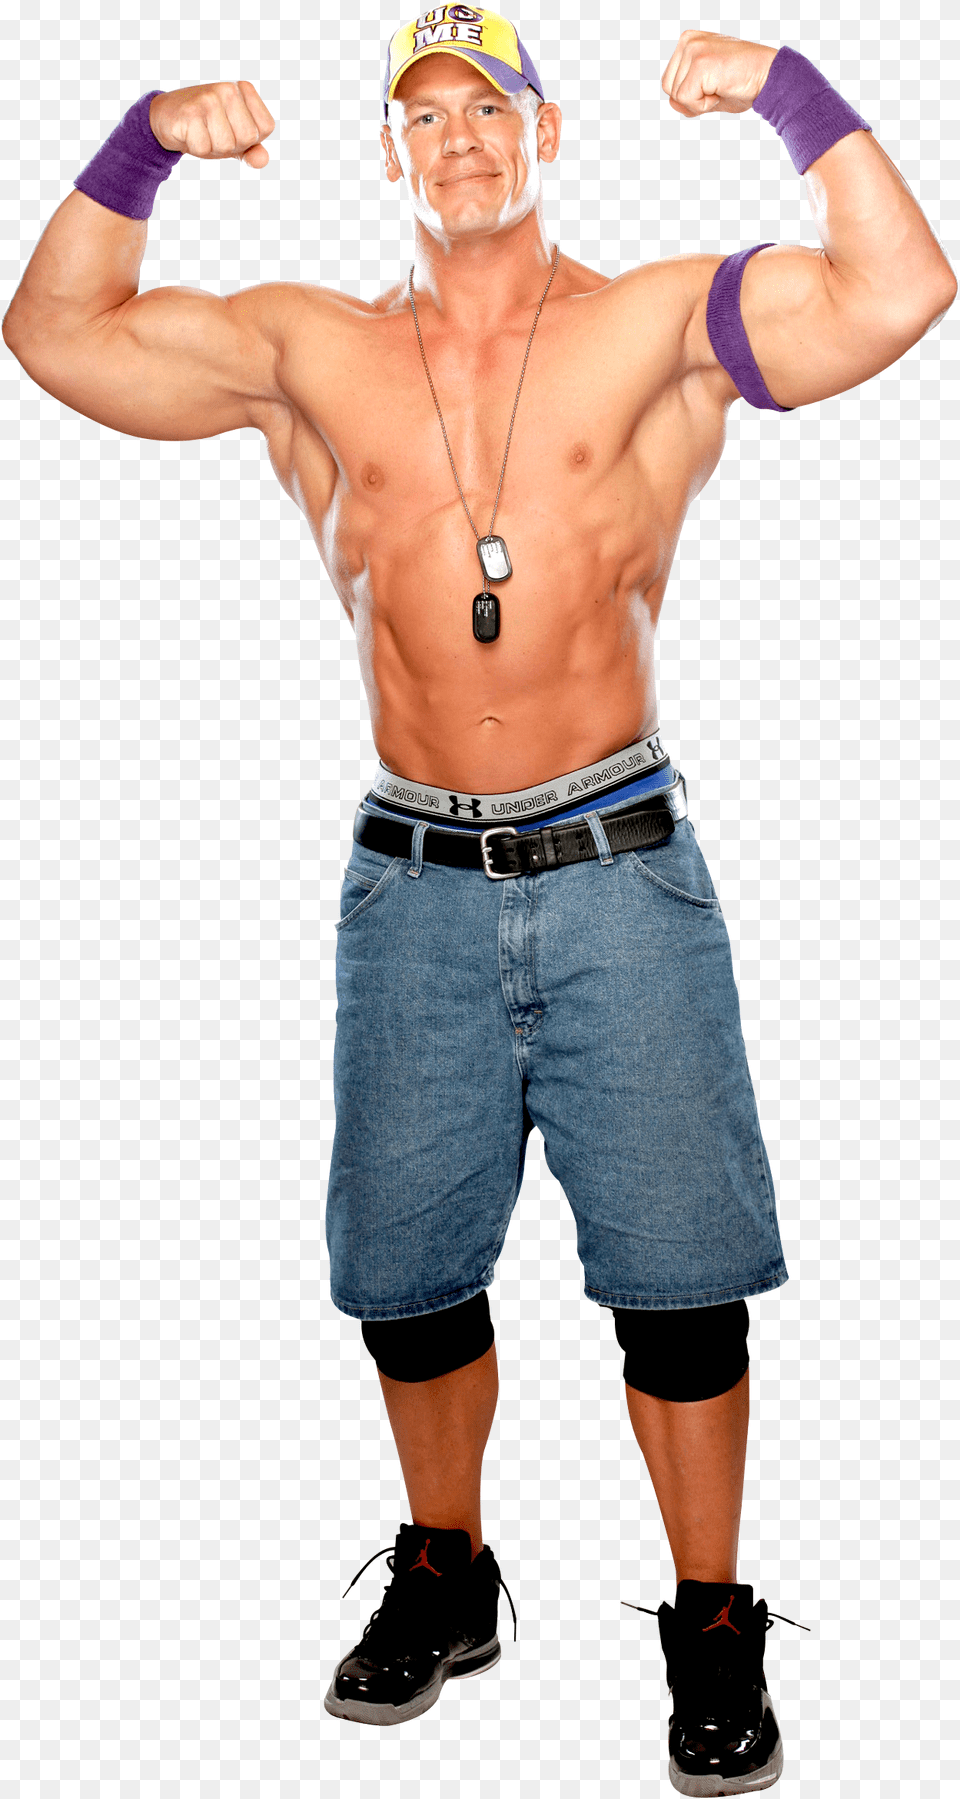 John Cena 2014 For Kids John Cena Hd, Shorts, Person, Pants, Body Part Png Image